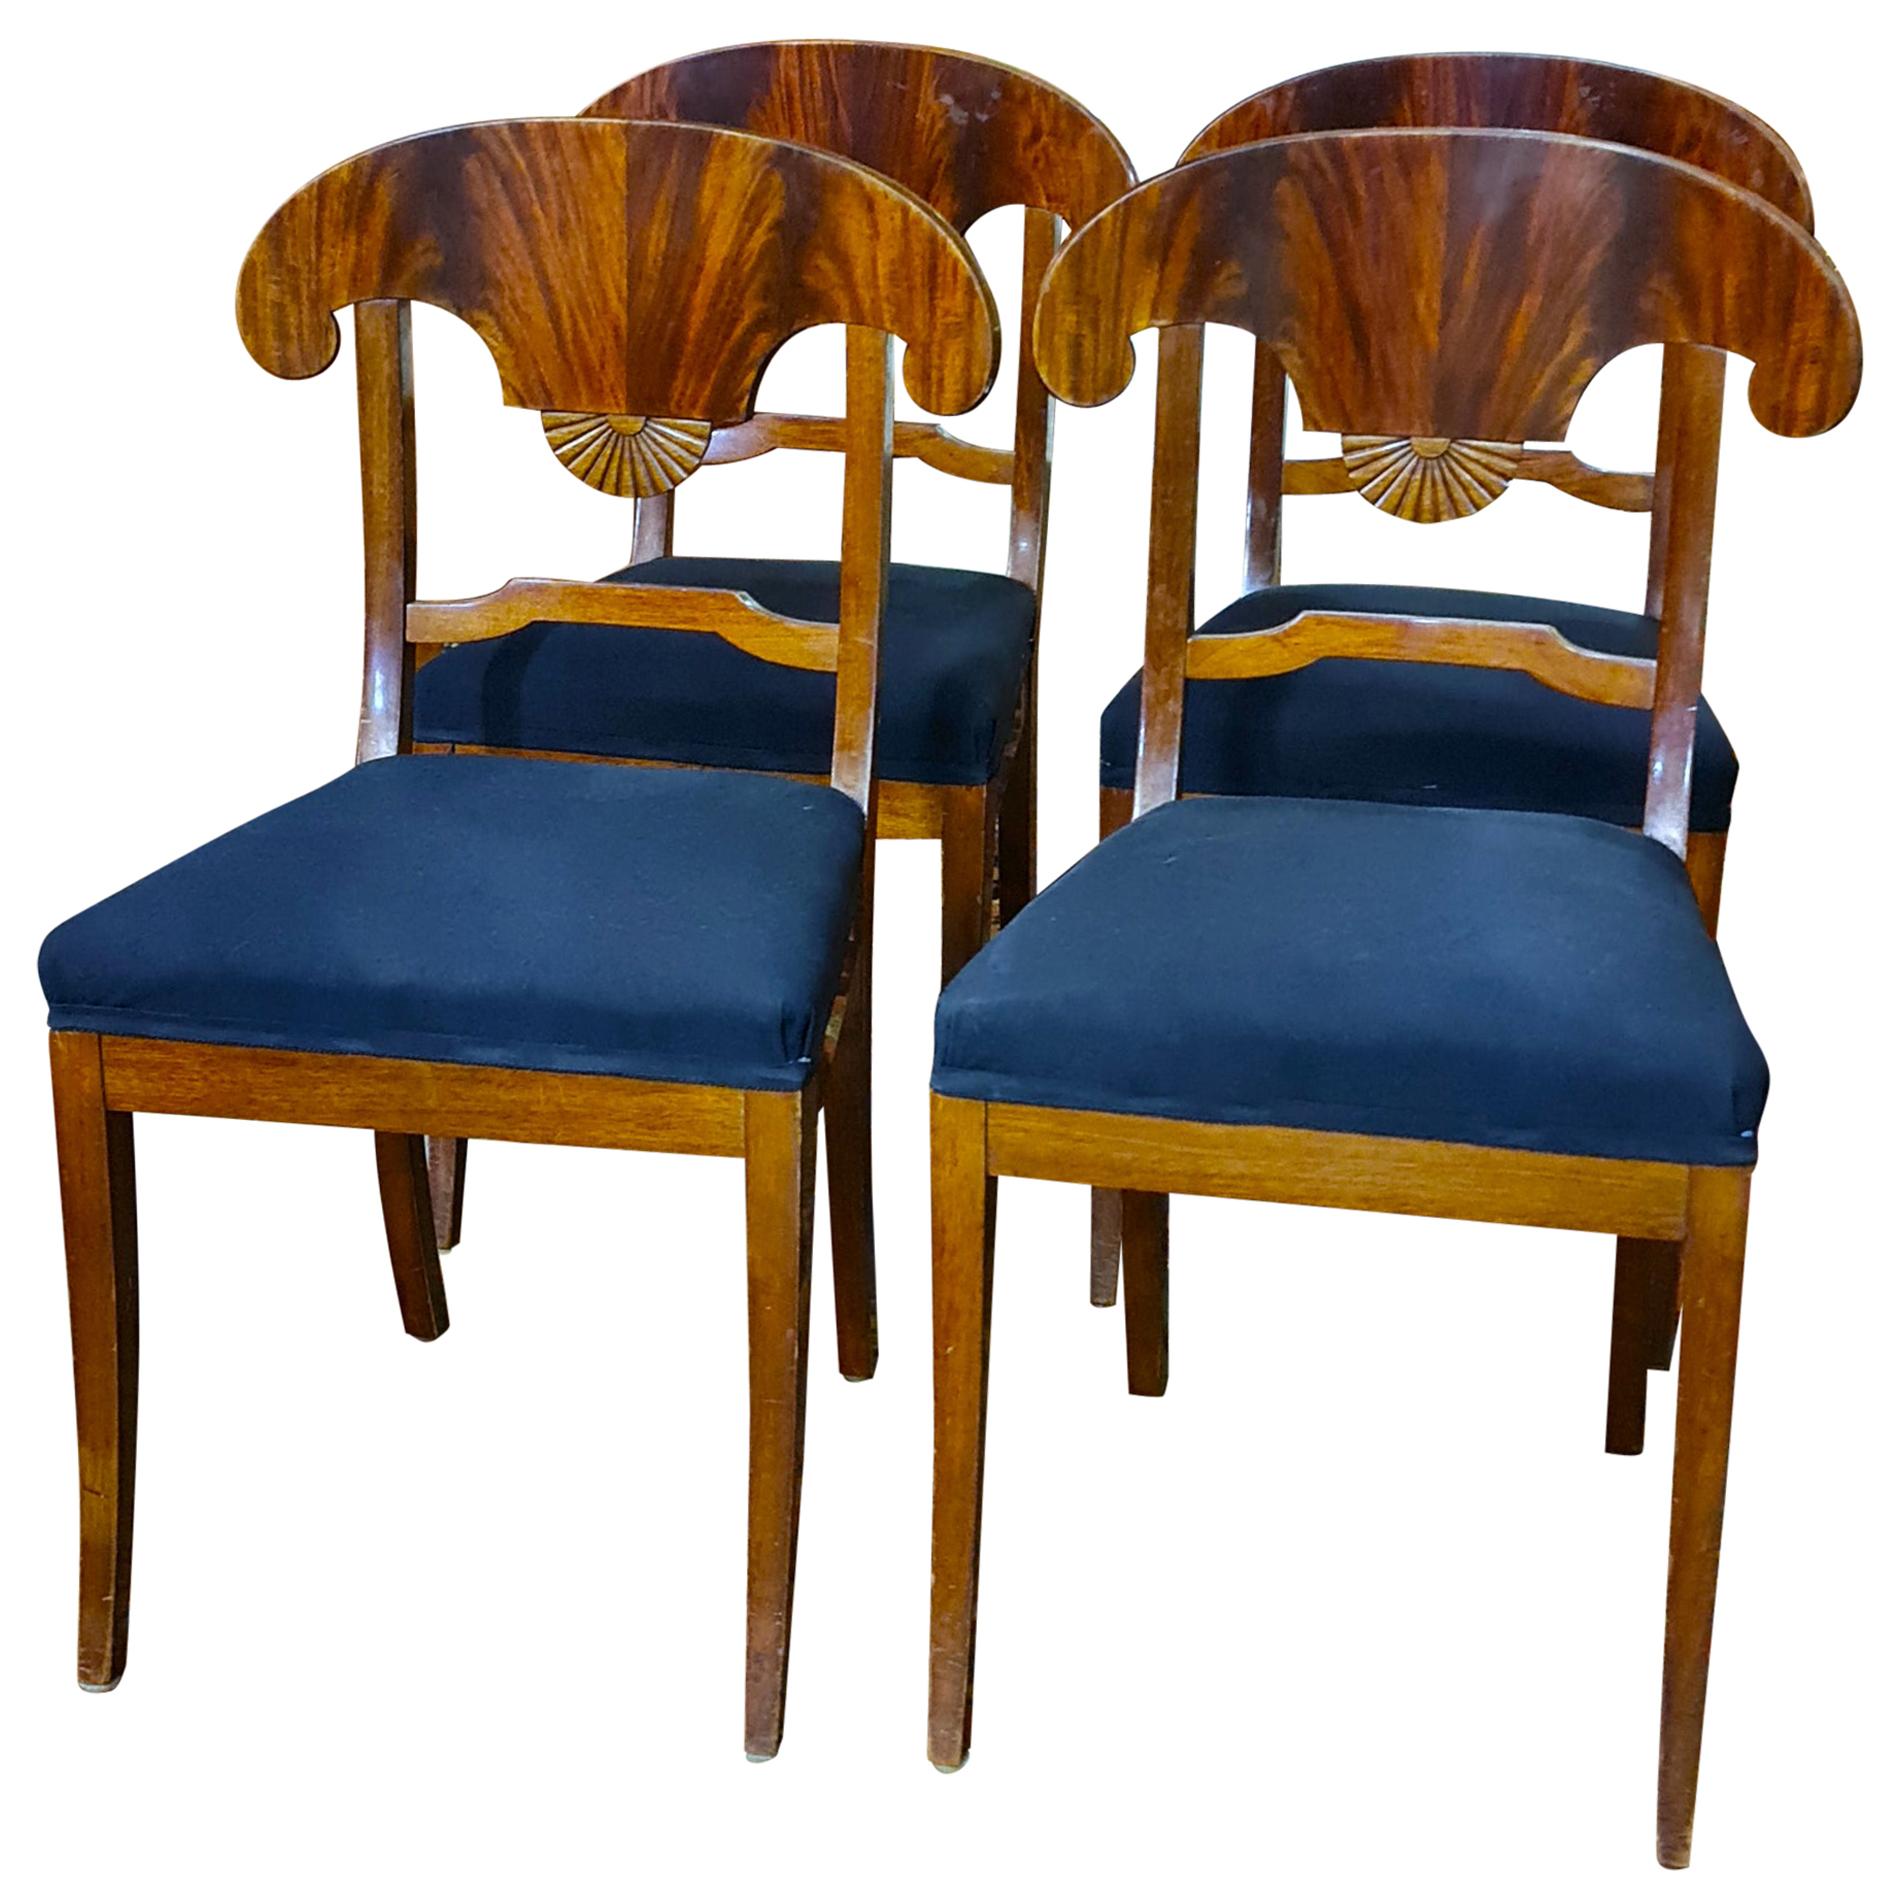 Swedish Biedermeier Dining Chairs Mahogany Set of 4 1800s Carver Chairs